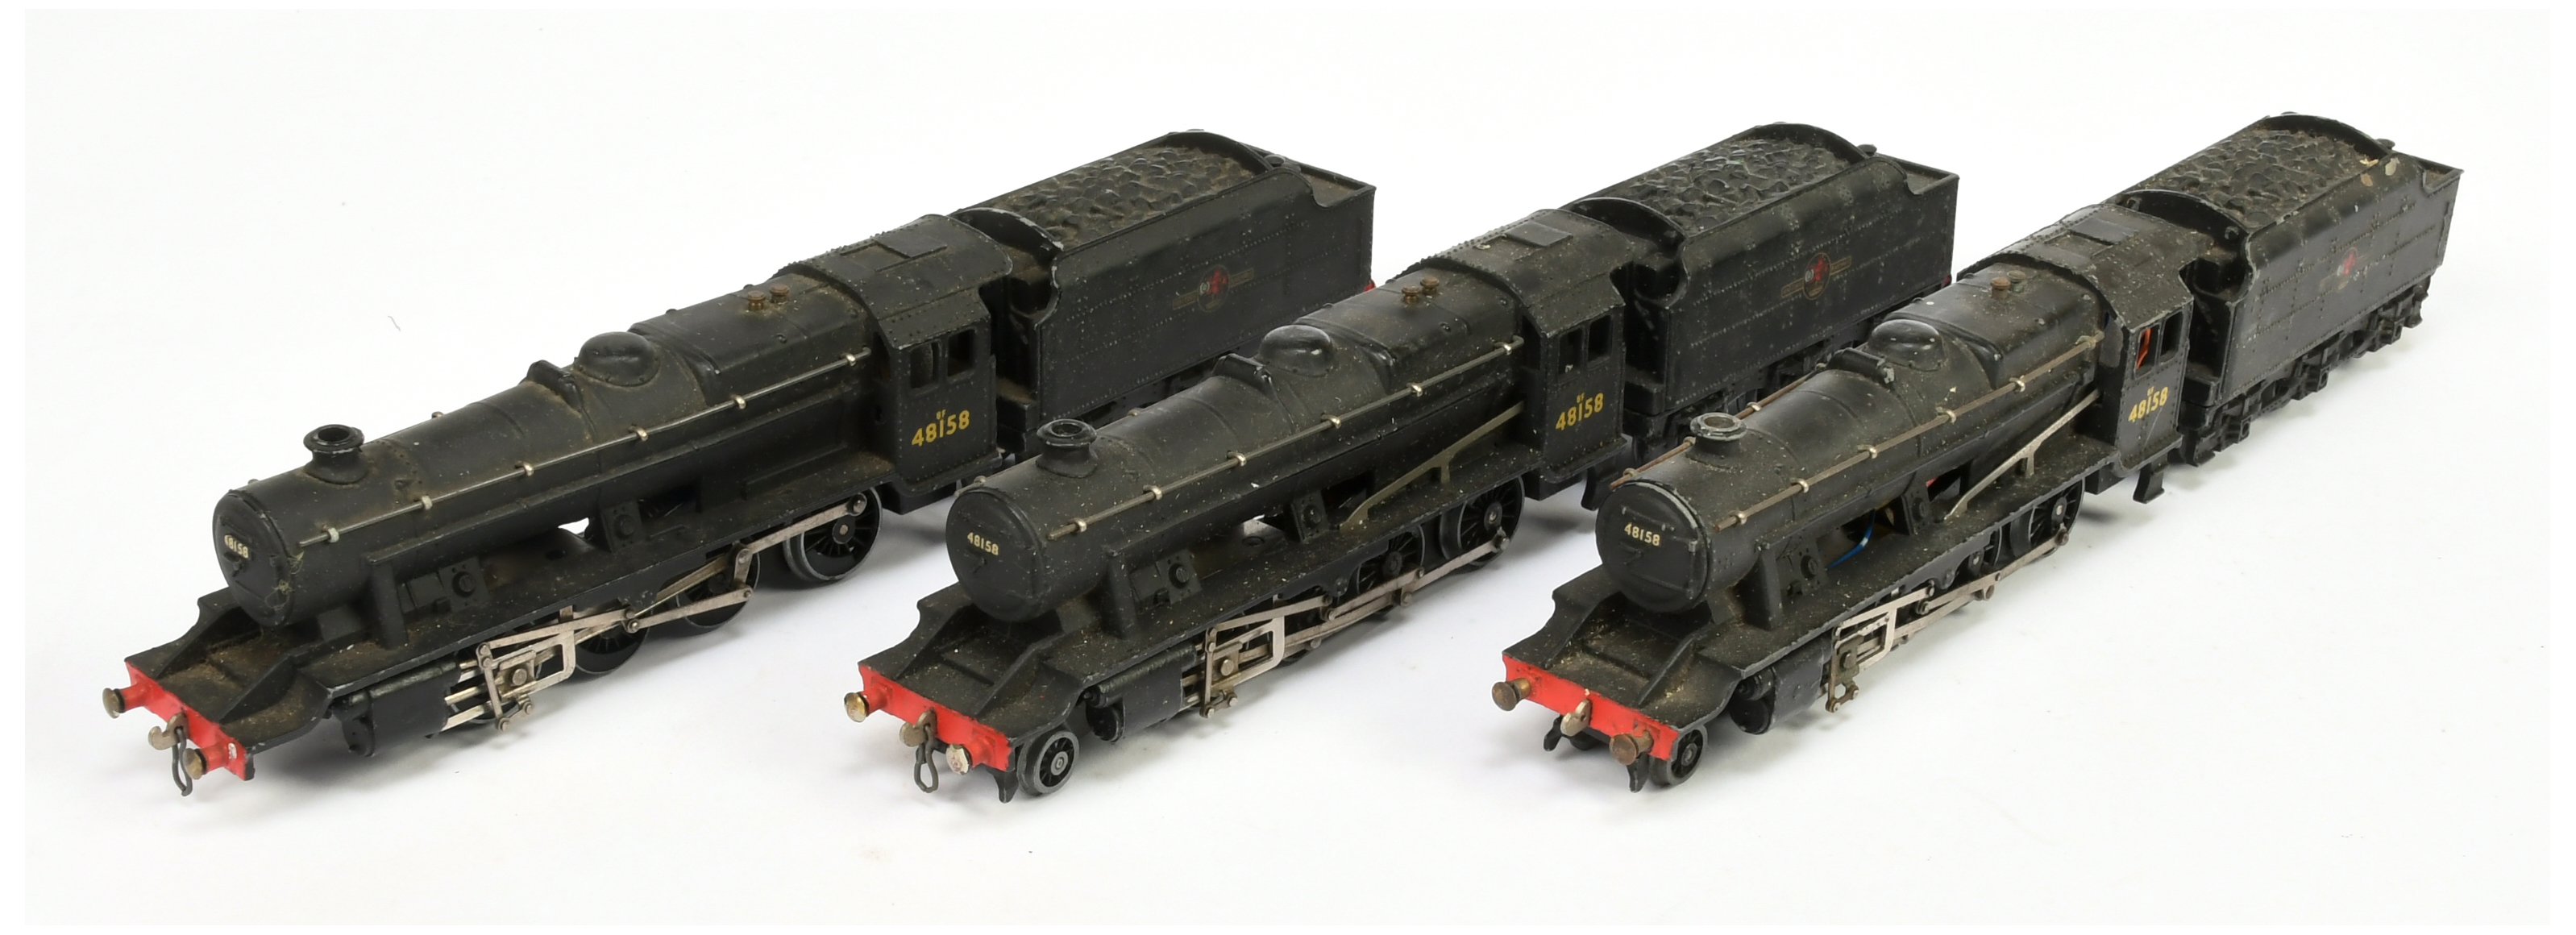 Hornby Dublo 3-rail group of 3x 2-8-0 BR black 8F Class No. 48158